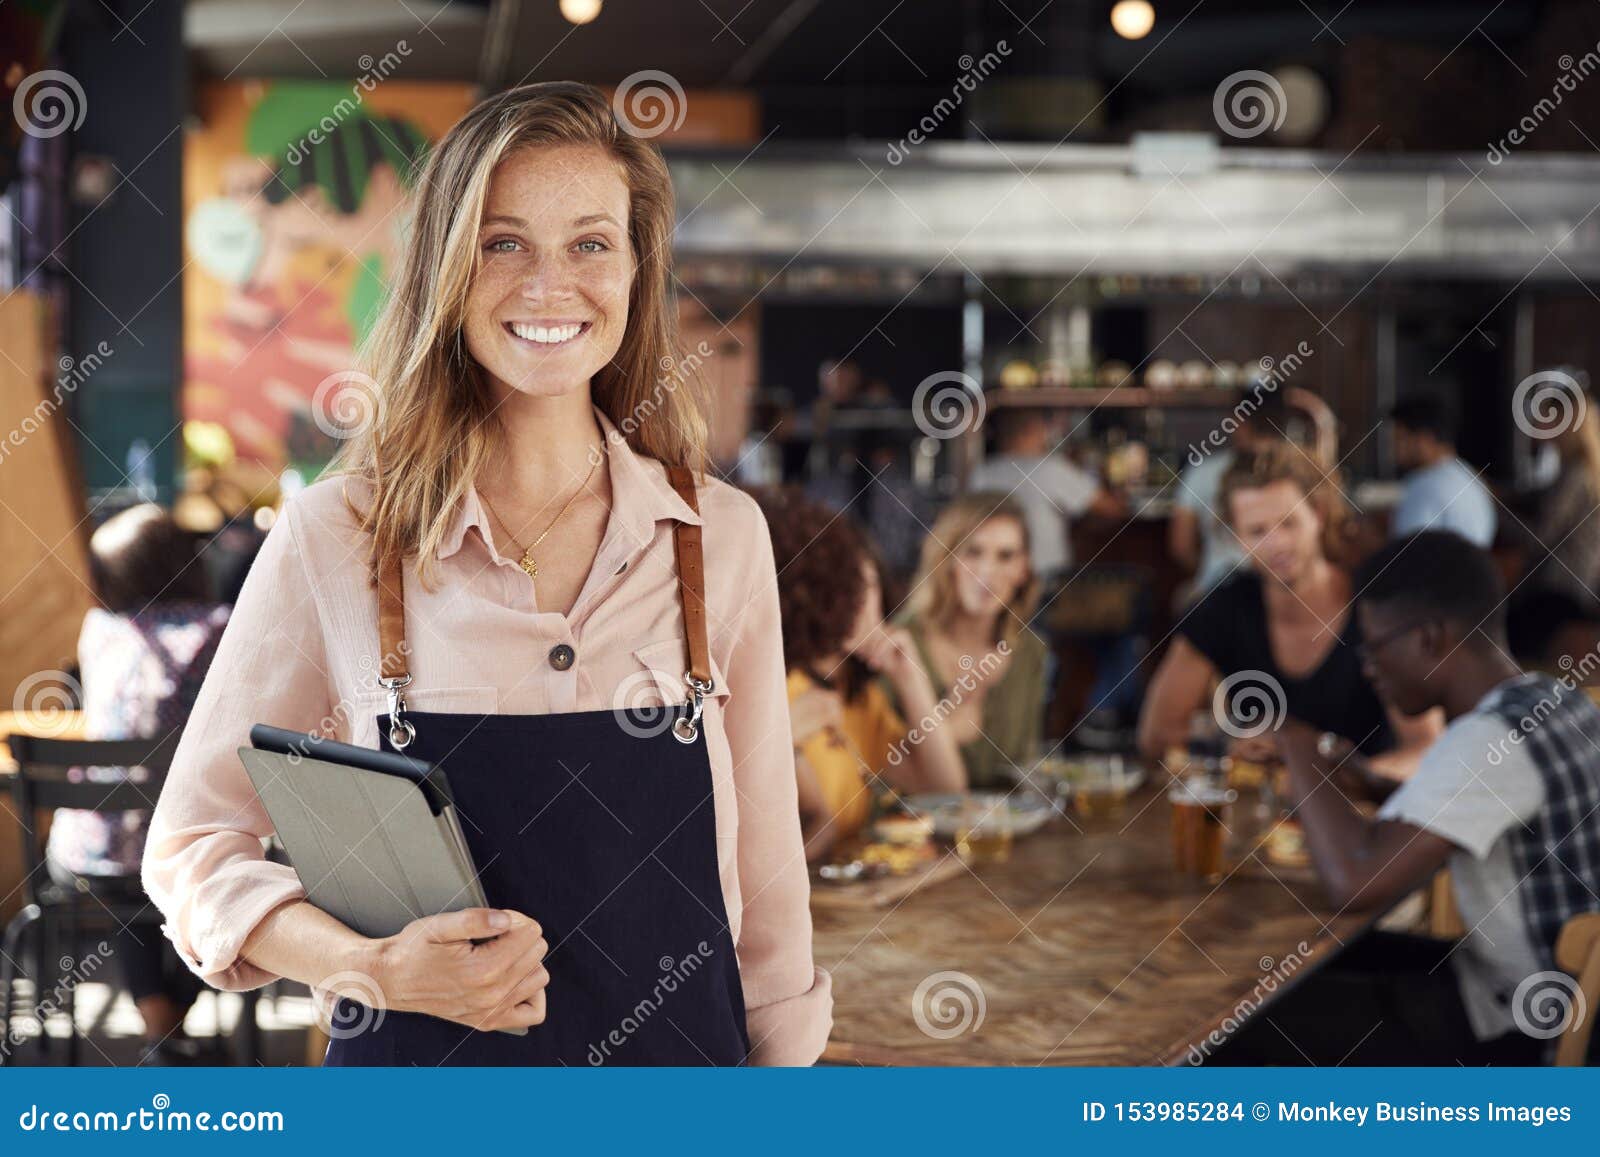 portrait of waitress holding menus serving in busy bar restaurant